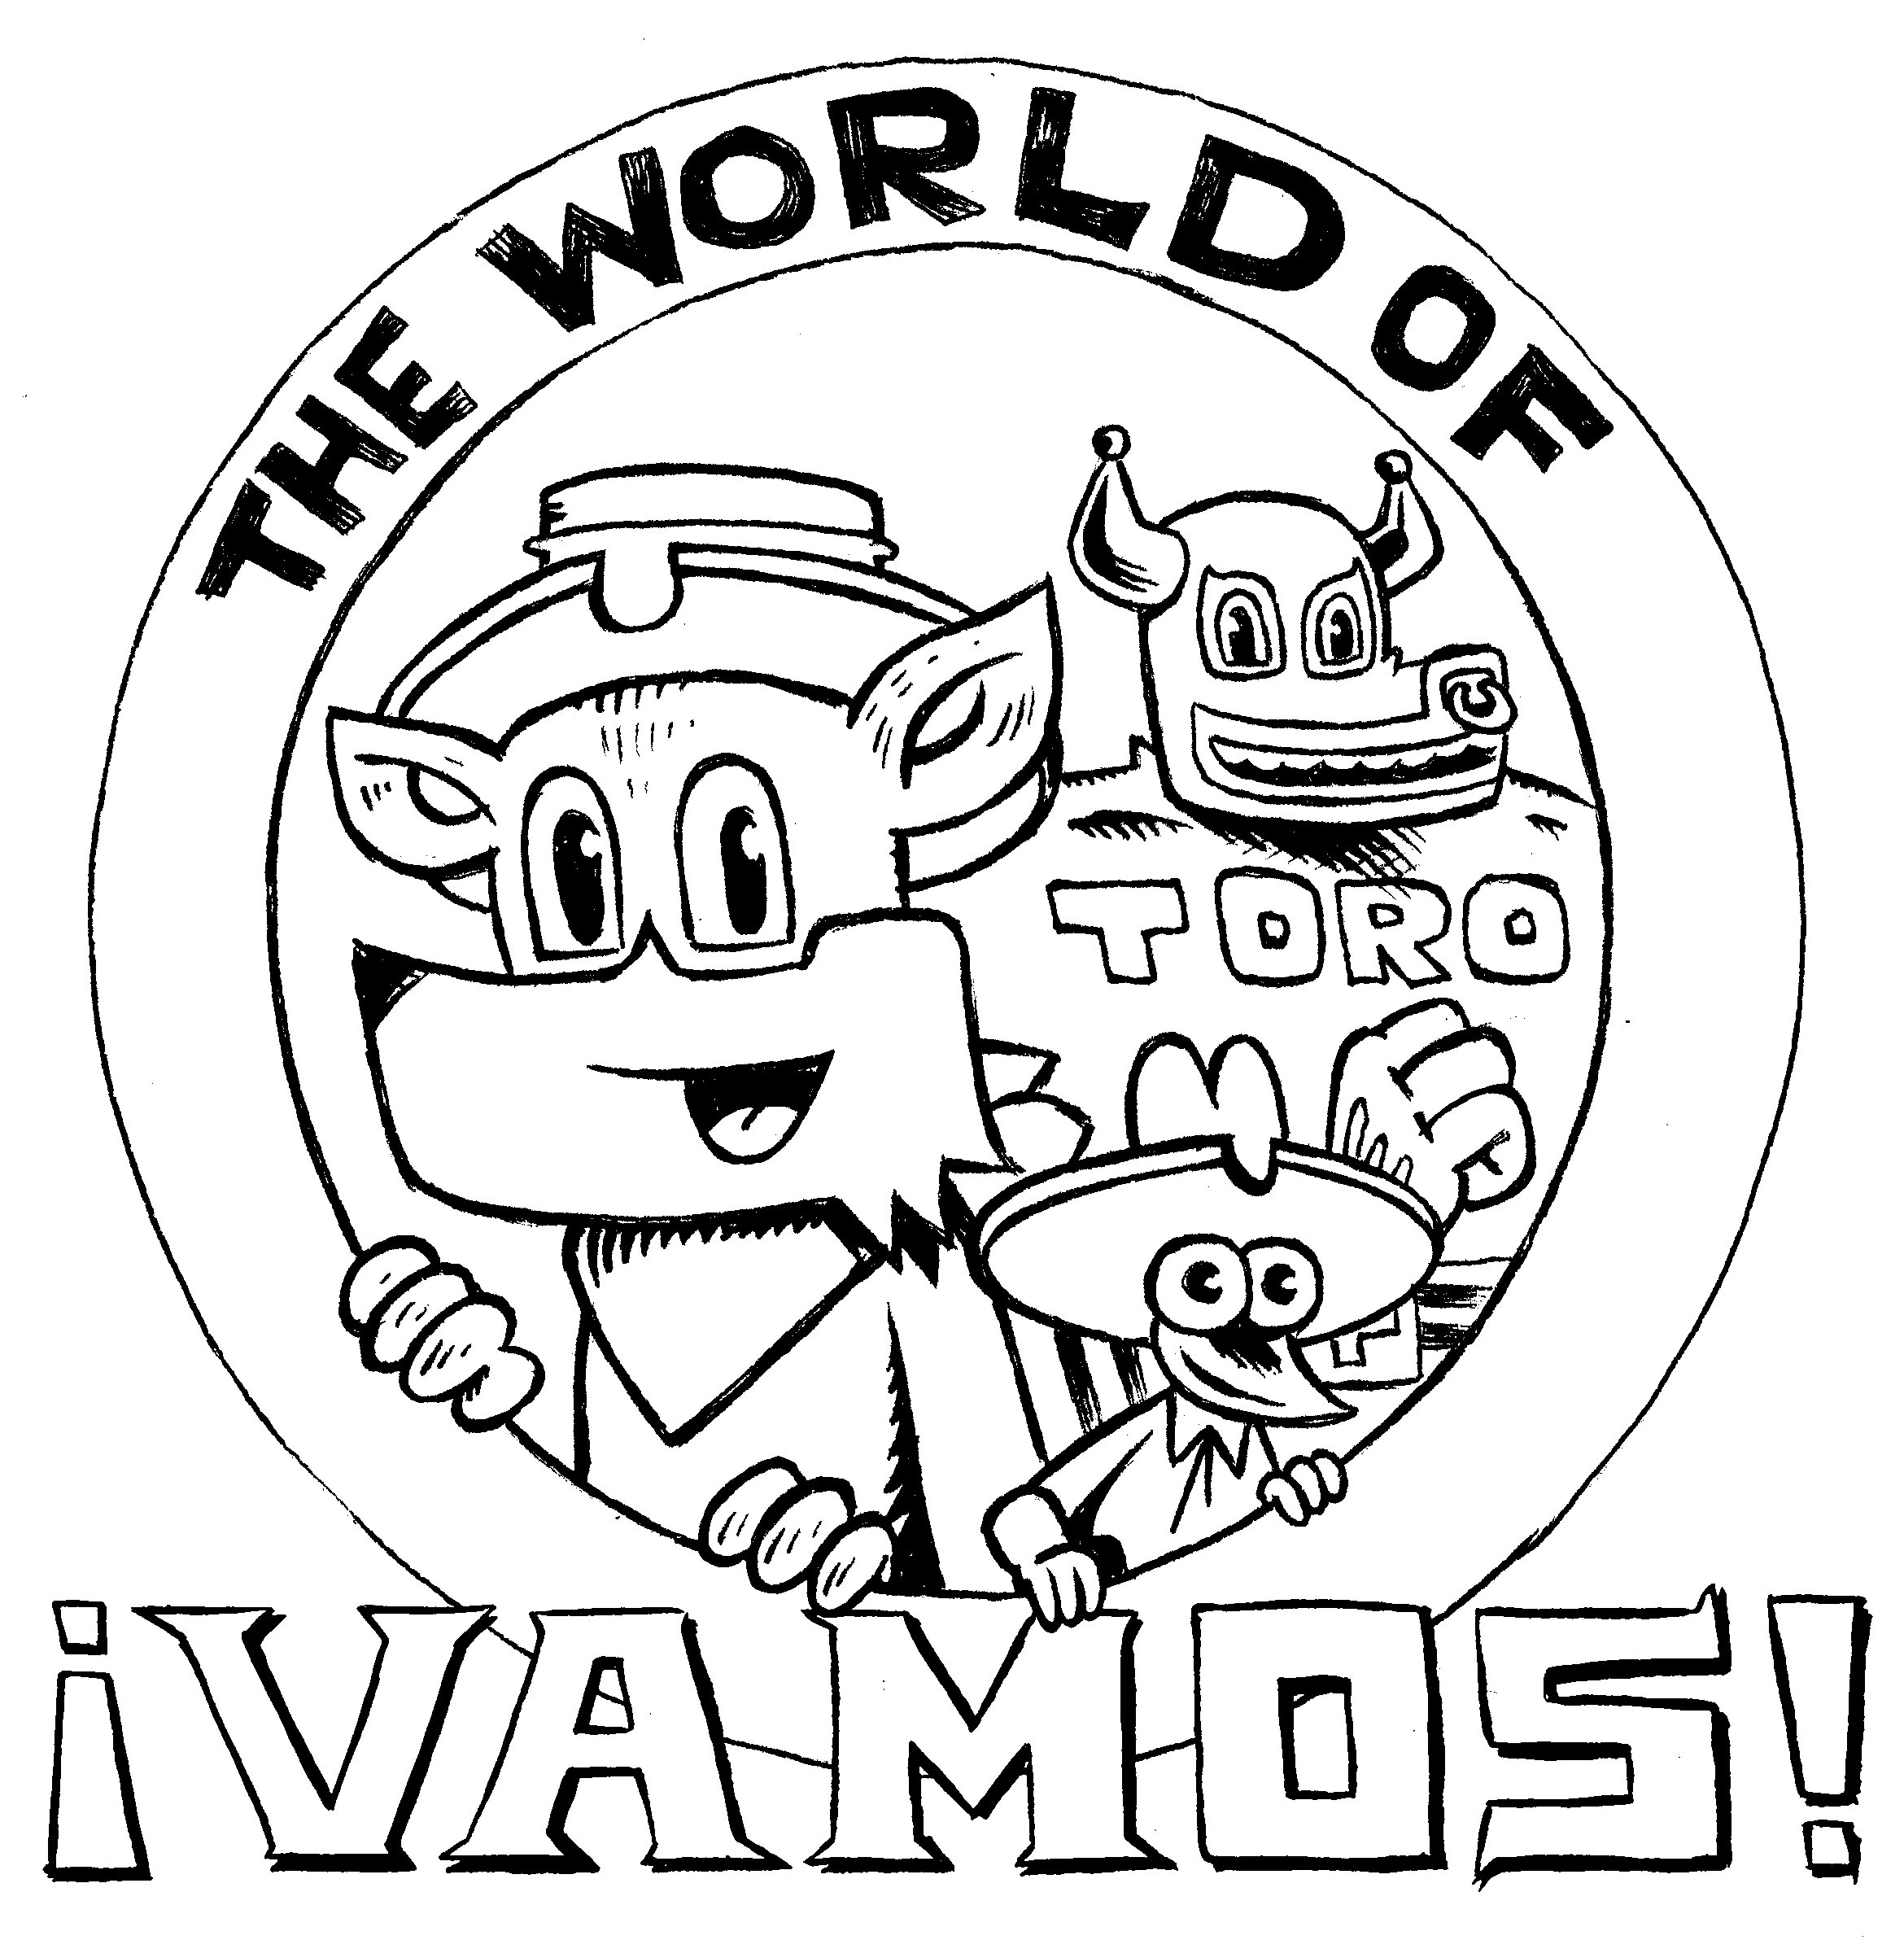  THE WORLD OF ¡VAMOS!